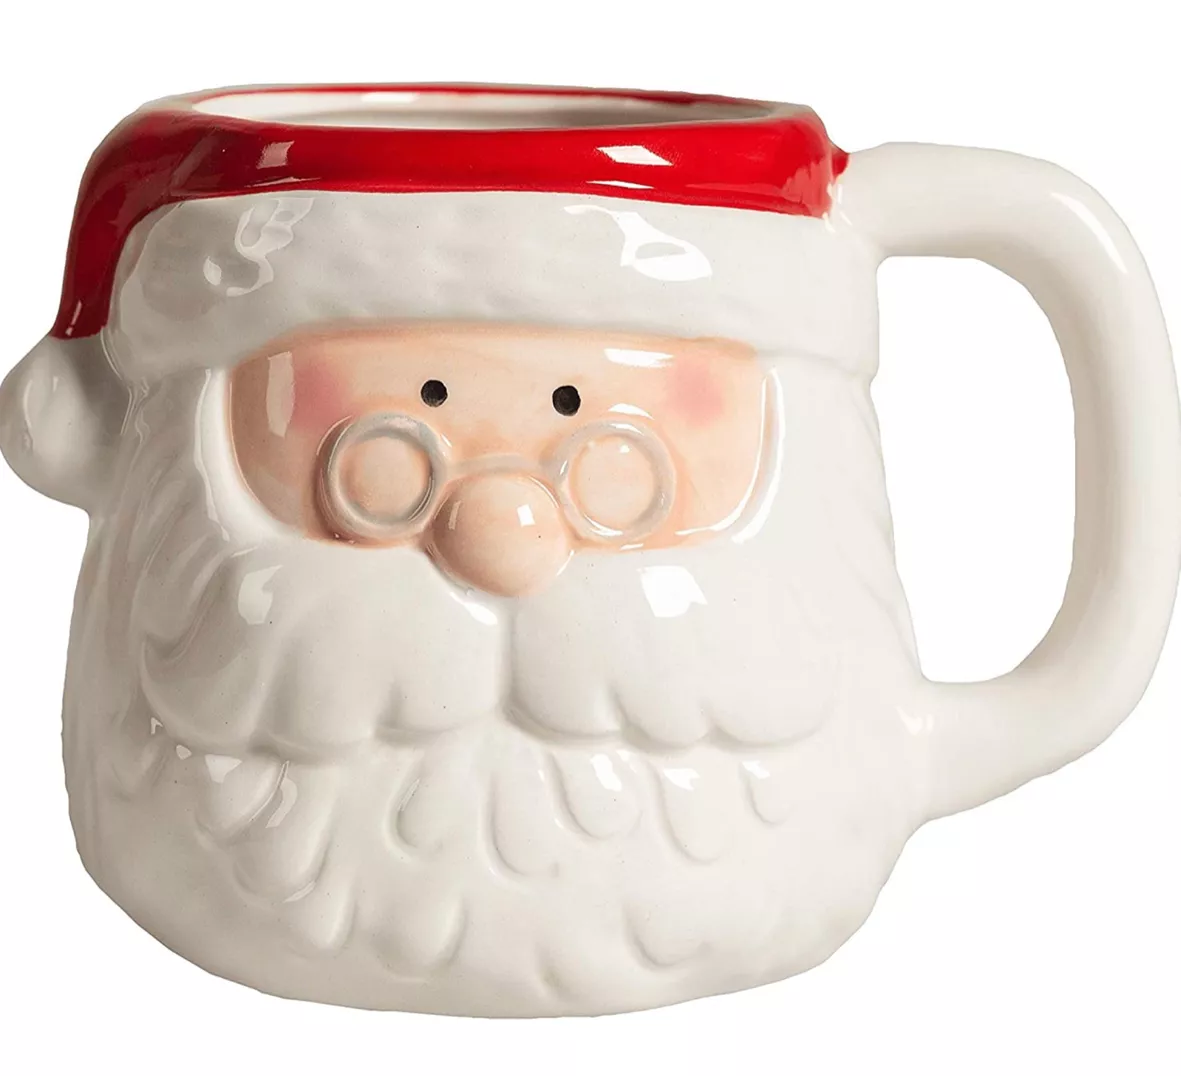 C&F Home 16oz Reindeer Cute Christmas Mug